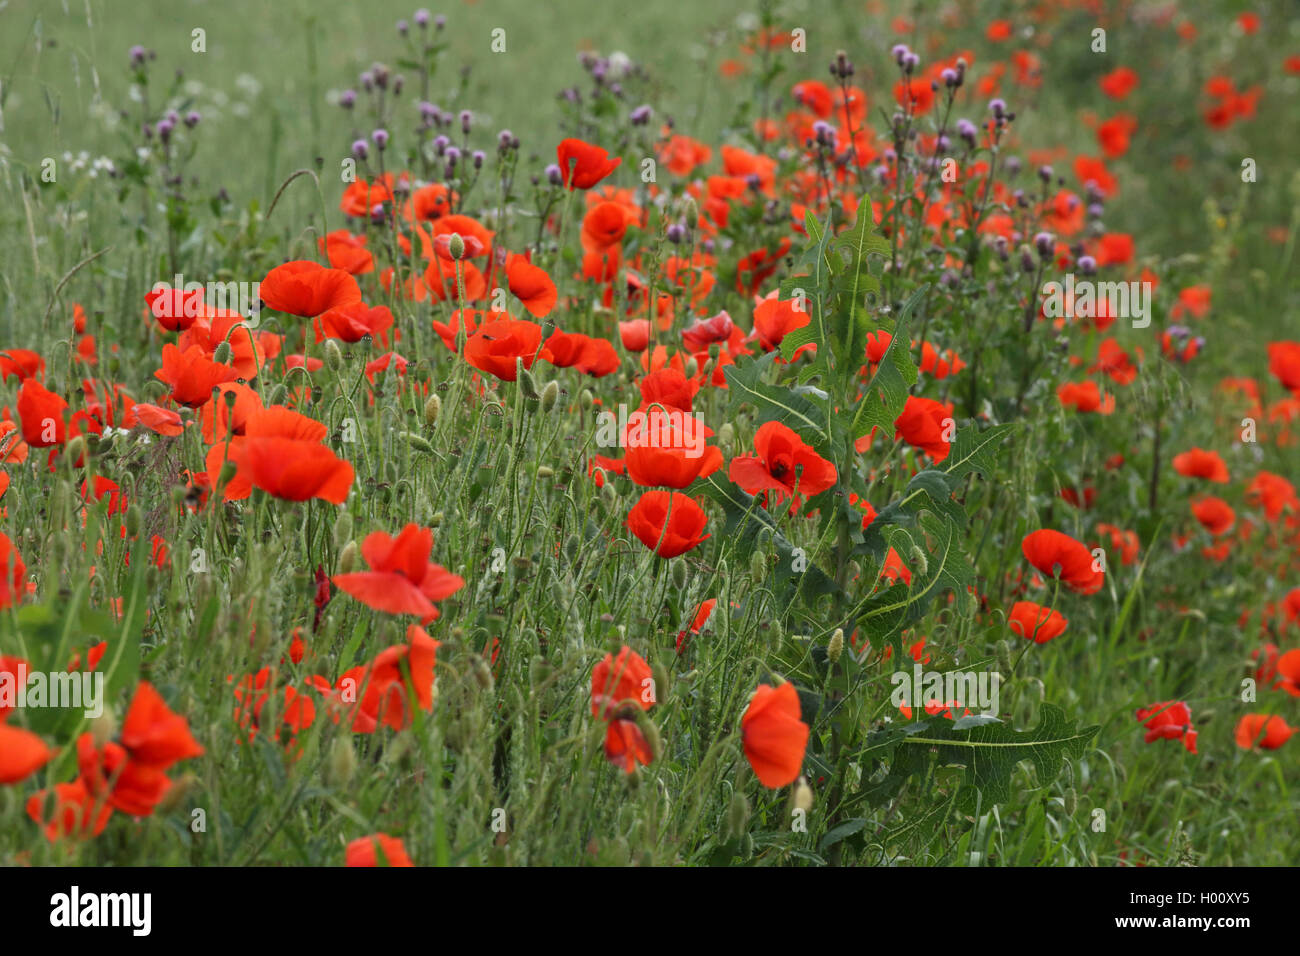 Comune di papavero, mais, papavero rosso papavero (Papaver rhoeas), bordo campo con semi di papavero e il Thistle, Germania Foto Stock